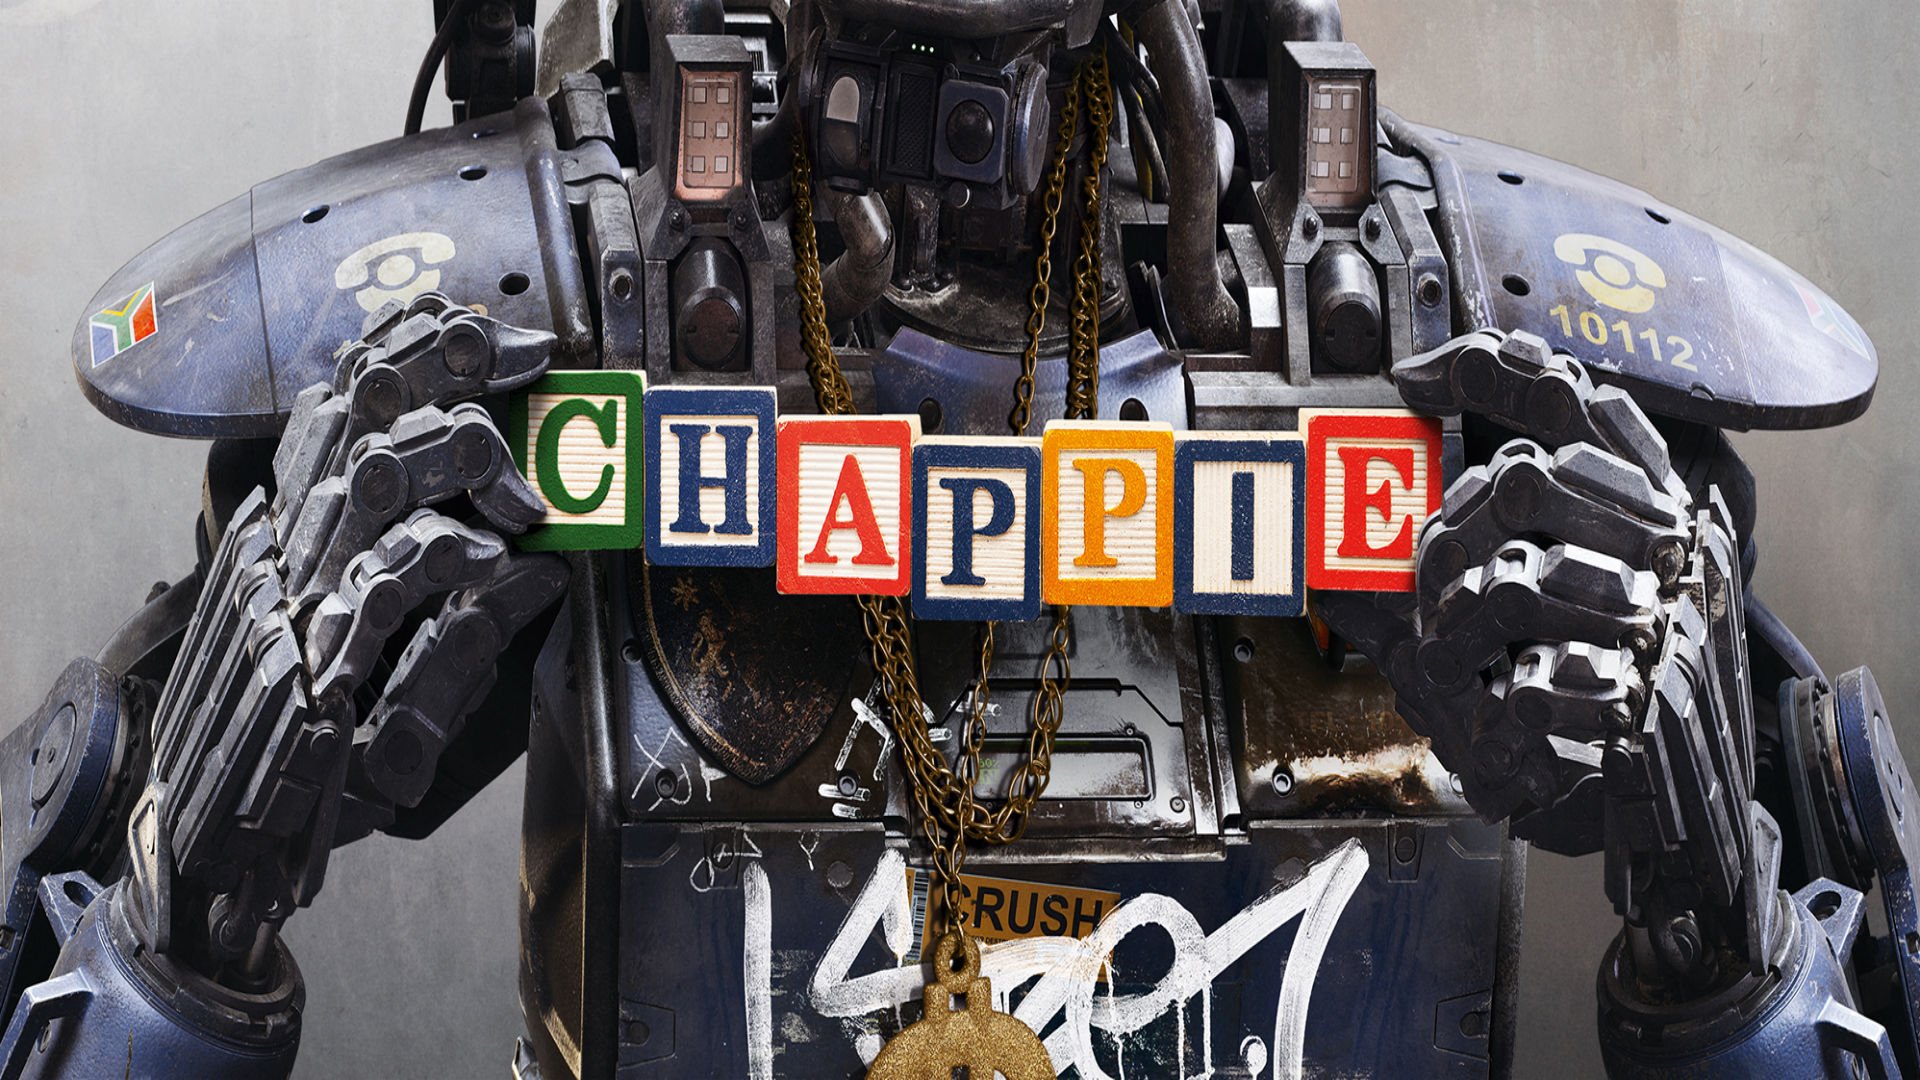 chappie, Sci fi, Futuristic, Action, Thriller, Robot, Technics, Science, Technology, 1chappie Wallpaper